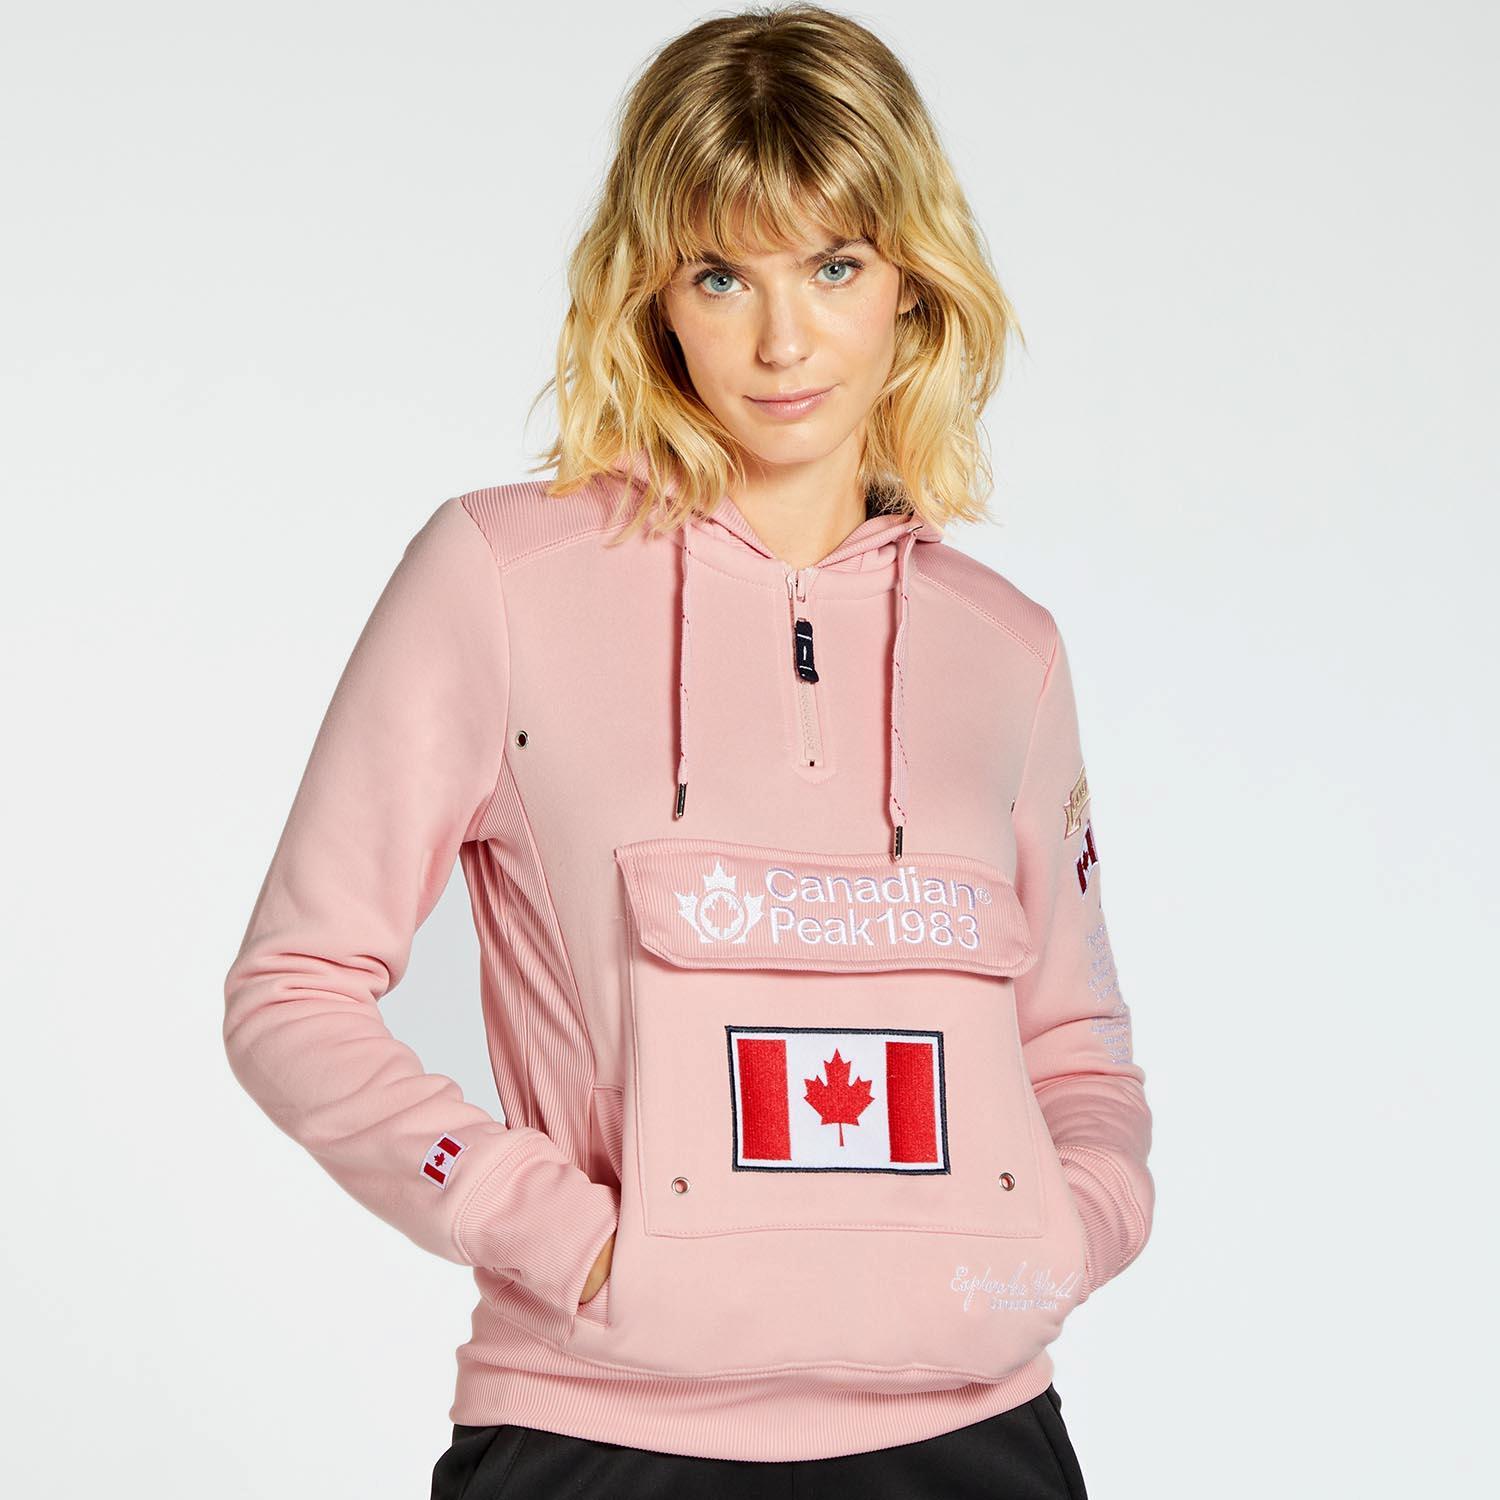 Canadian Peak Getrelle - Rose - Sweat à Capuche Femme sports taille S